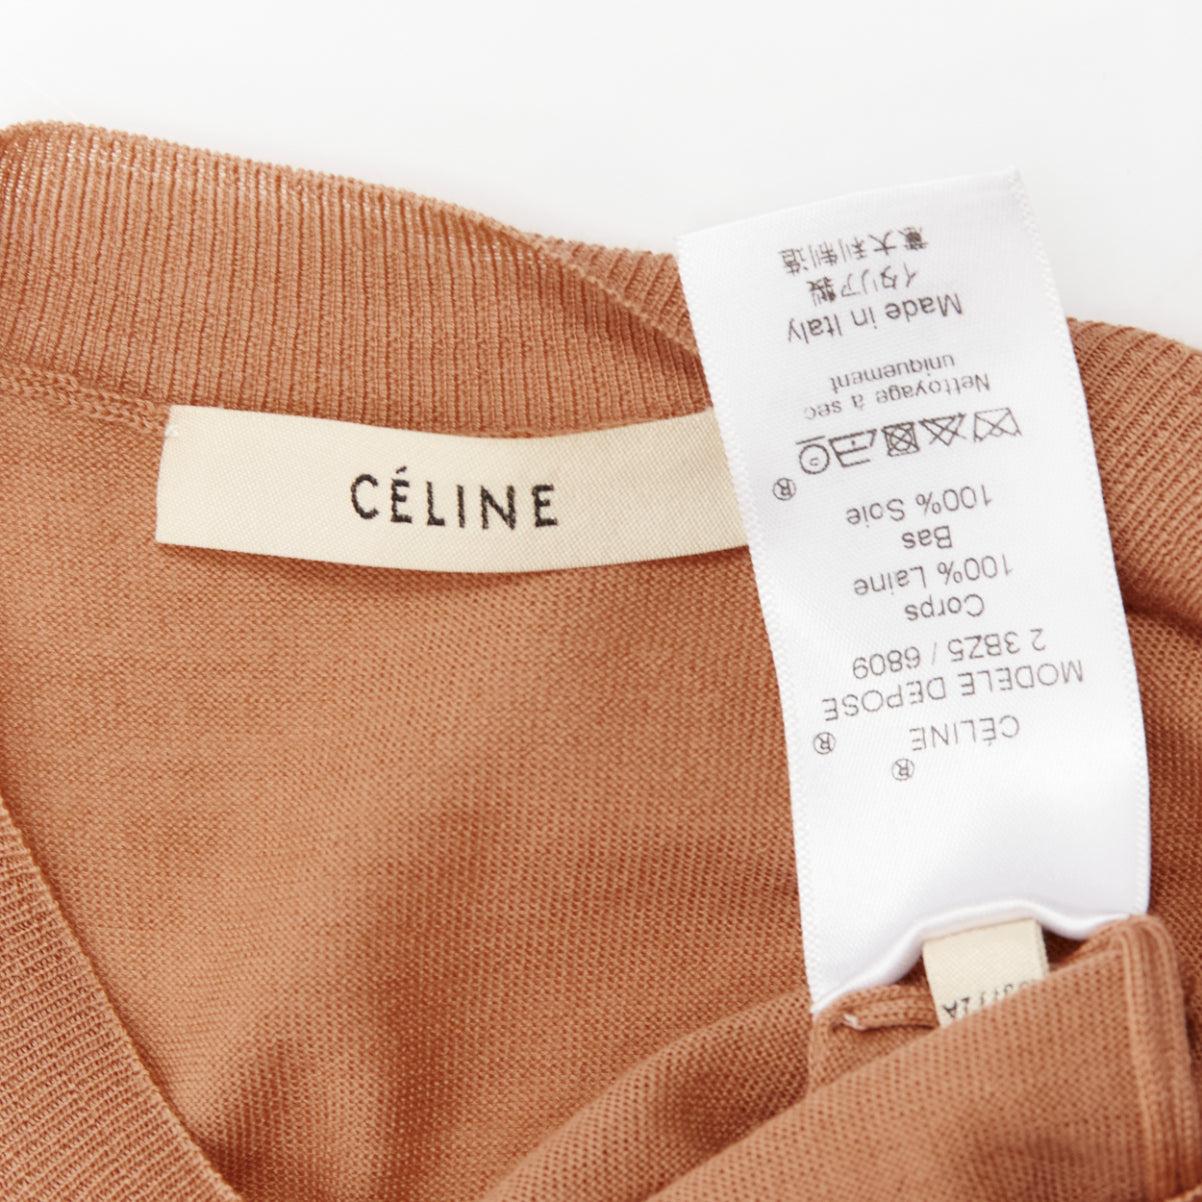 Celine Phoebe Philo nude 100% wool silk bicolor wide strap vest knitted top XS en vente 4